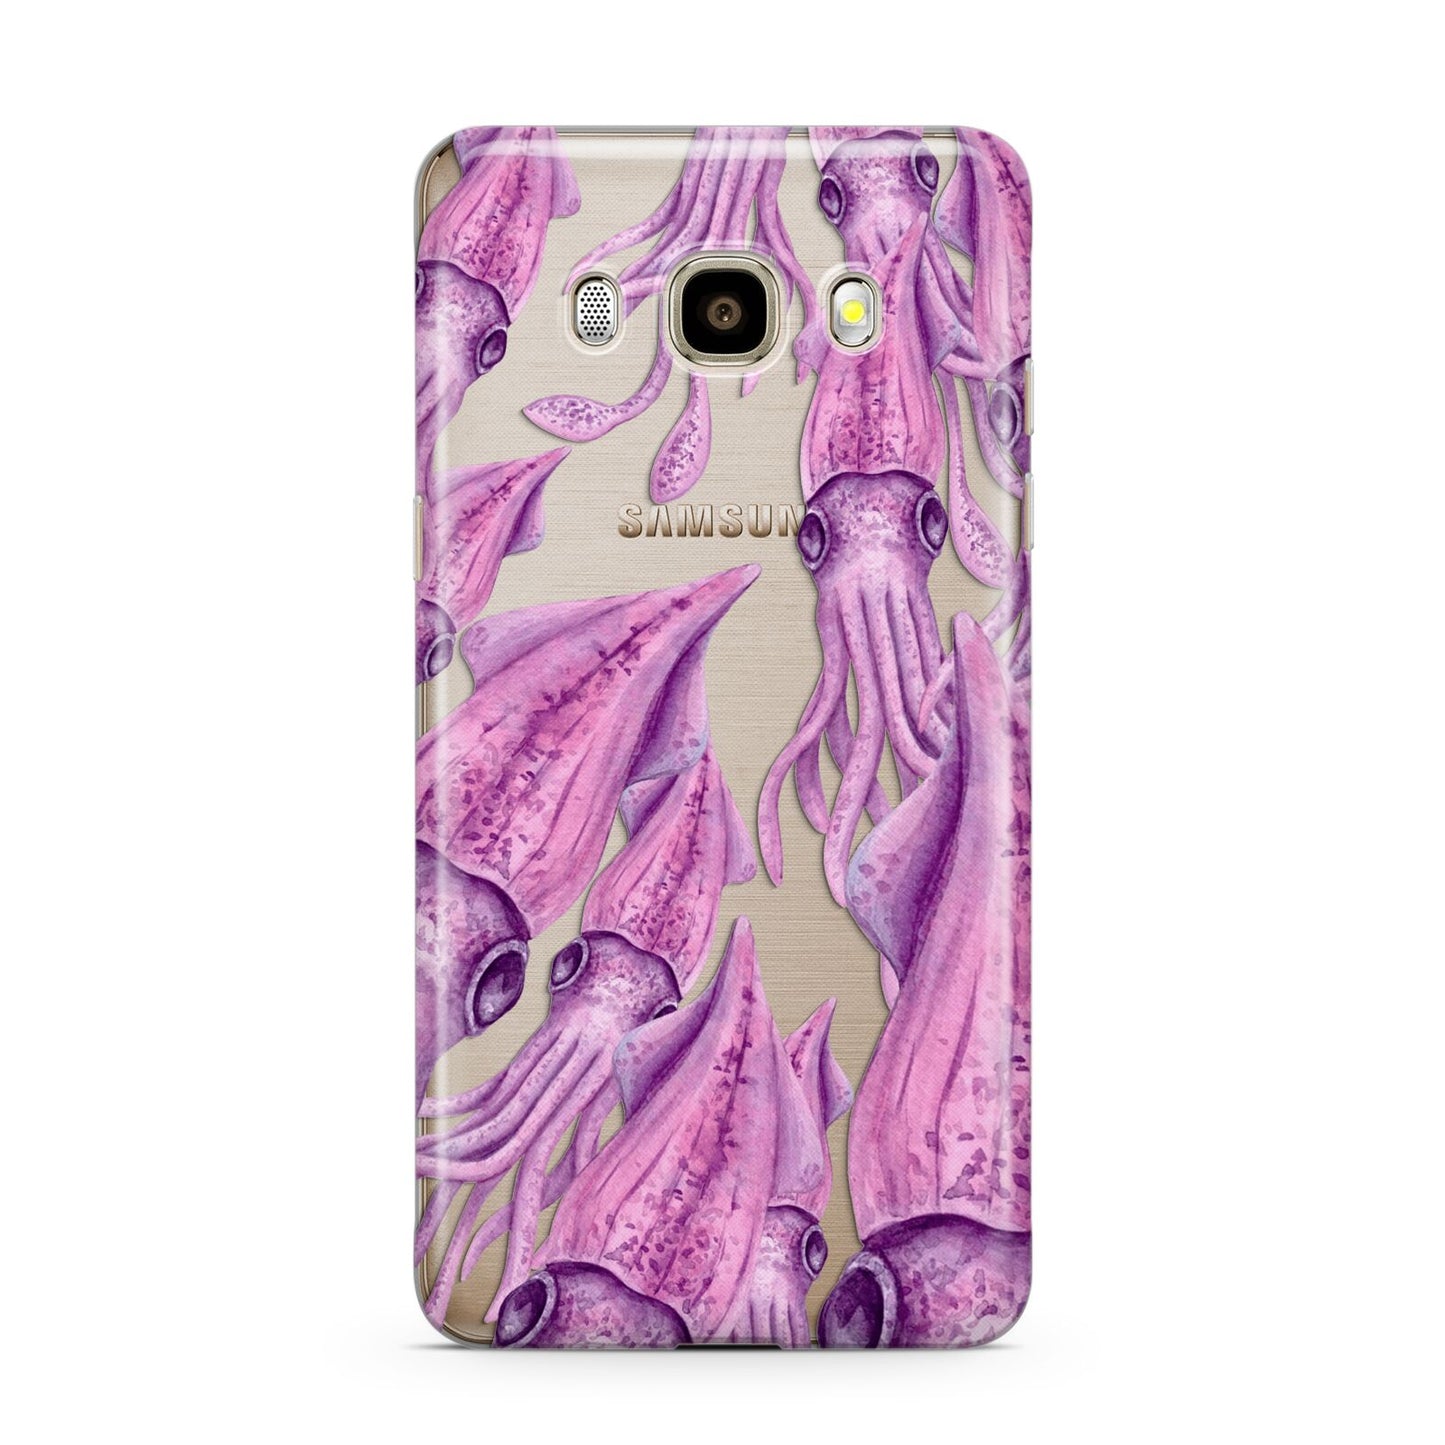 Squid Samsung Galaxy J7 2016 Case on gold phone